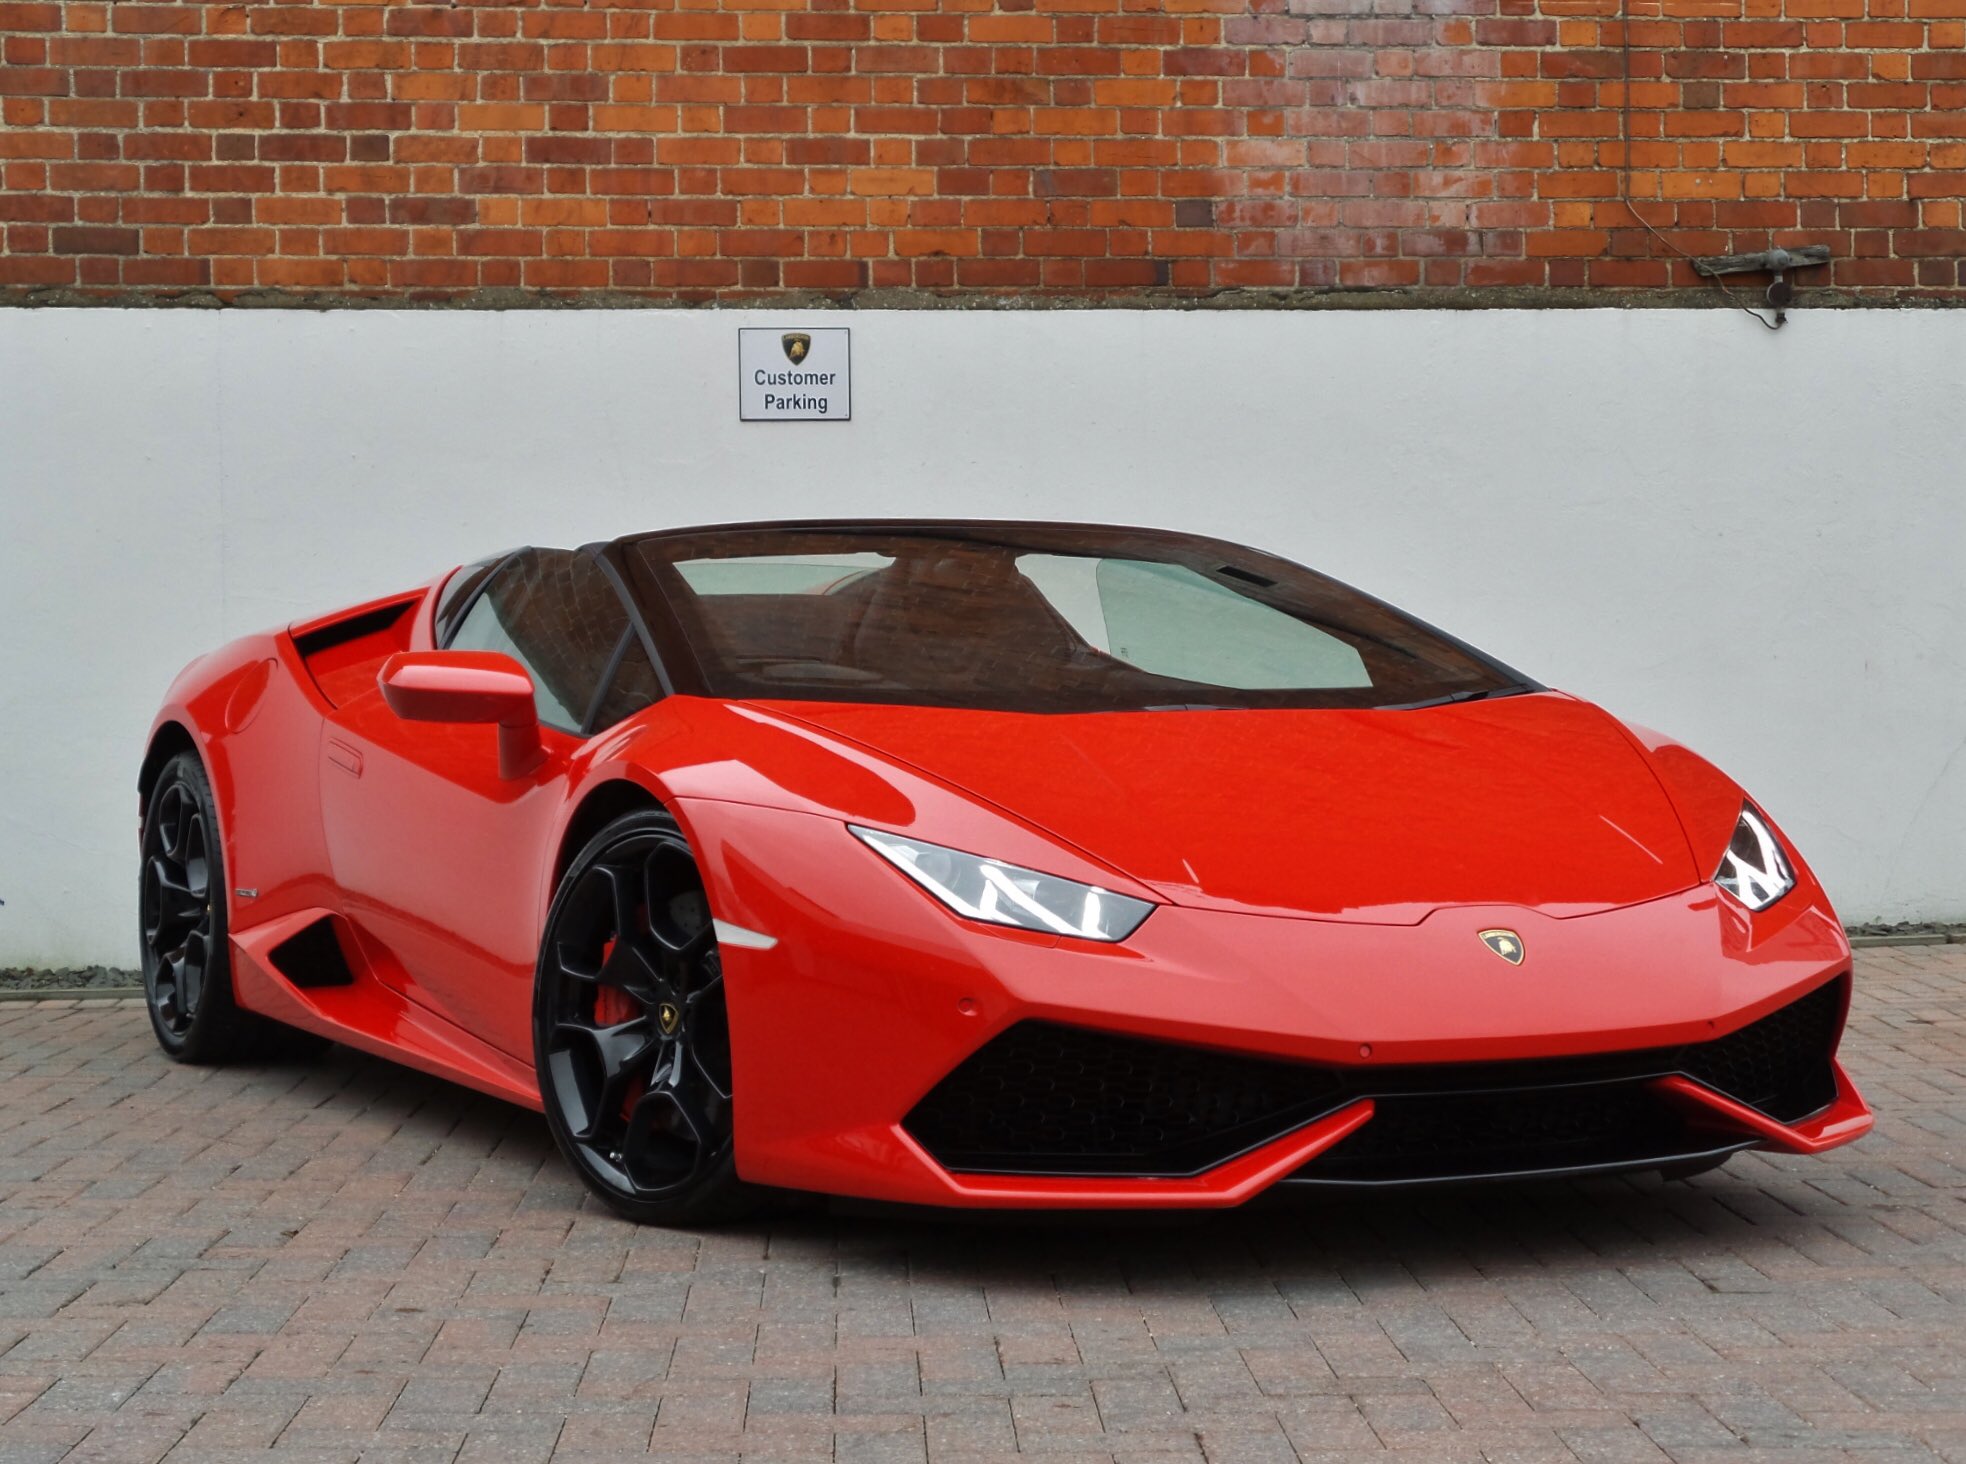 H.R Owen Lamborghini on Twitter: "Rosso Mars Huracan ...